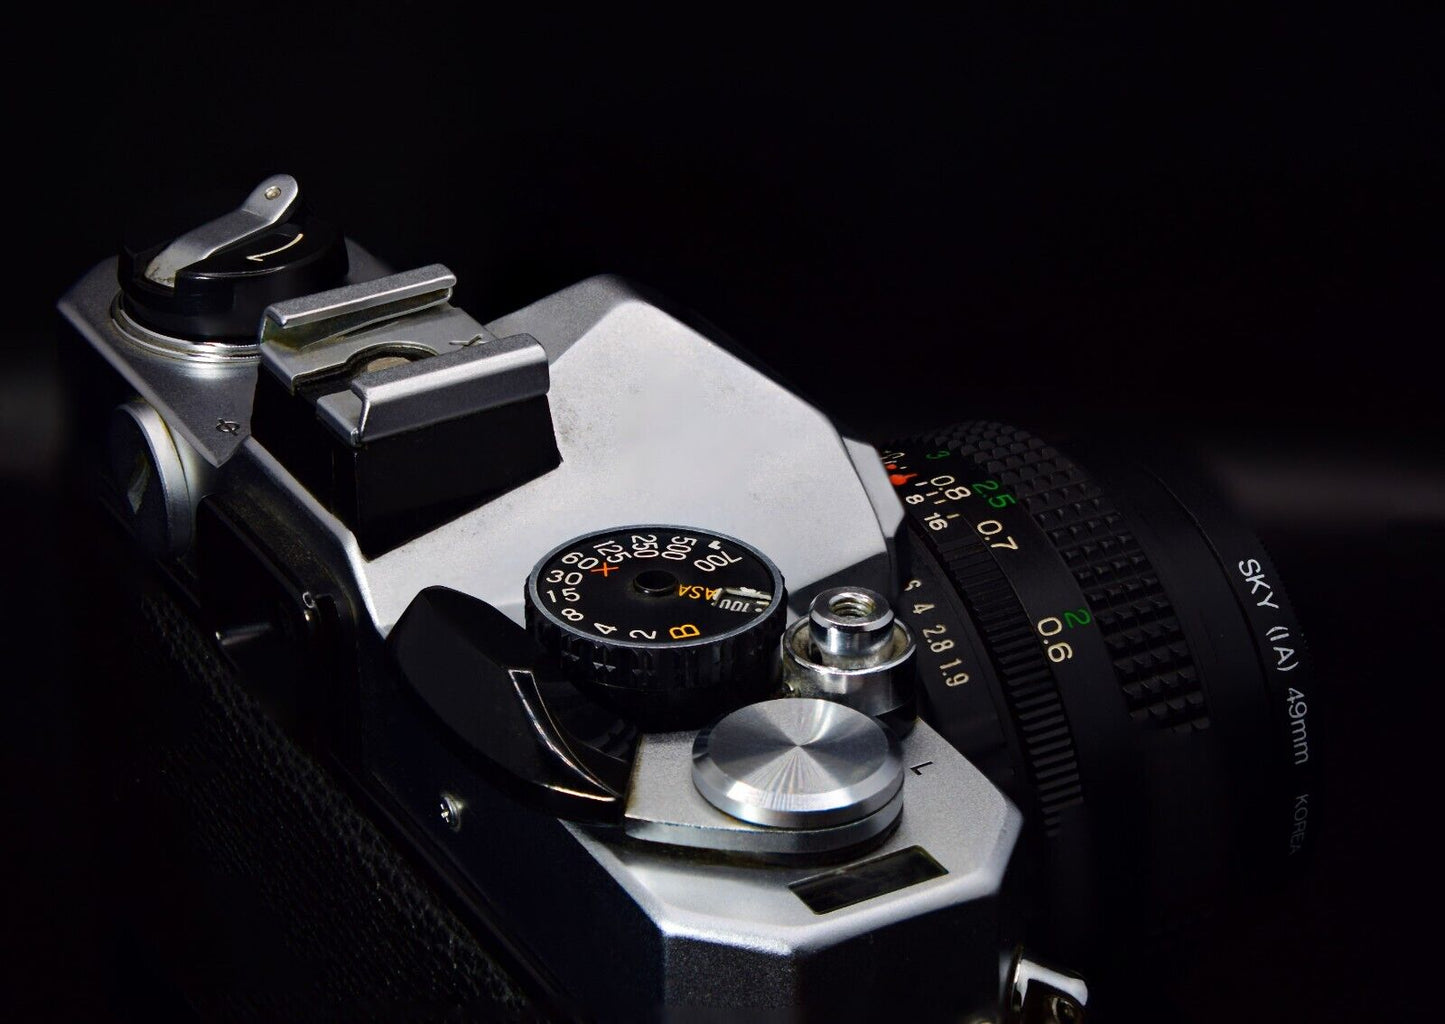 Fujica STX-1 35mm Vintage SLR Camera with Fuji X-Fujinon f/1.9 50mm Lens & Filter